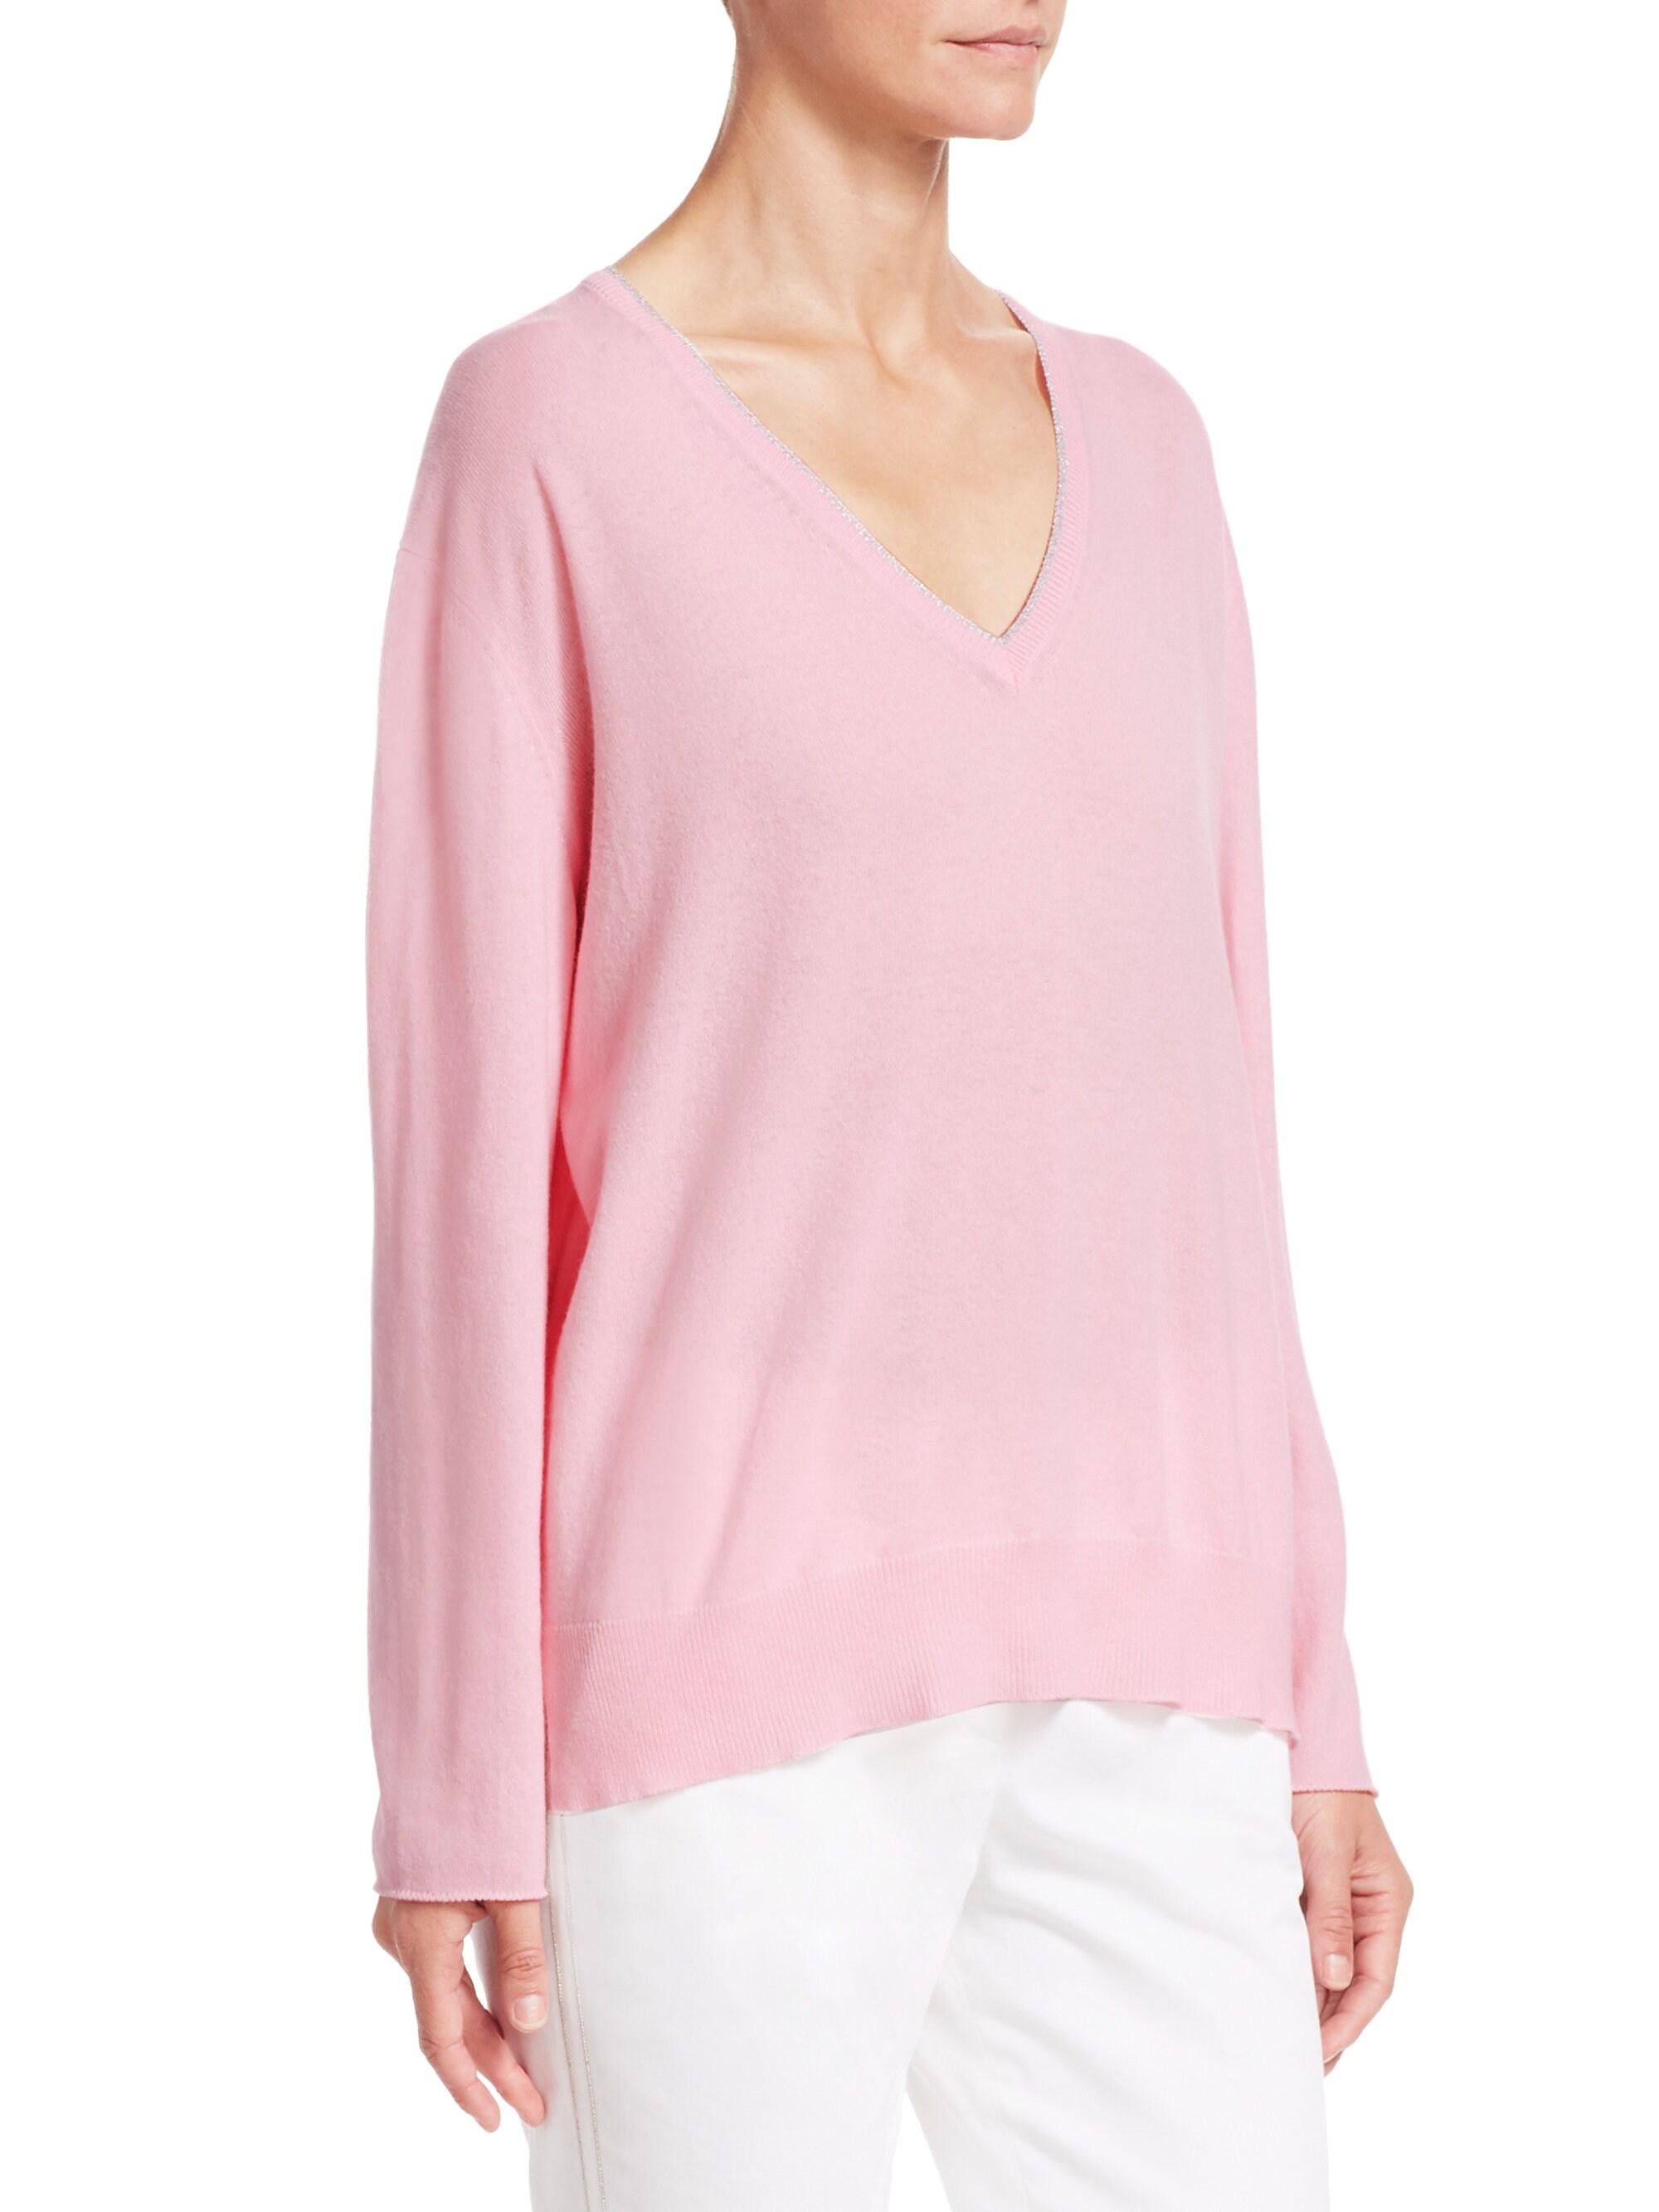 Fabiana Filippi Cashmere Lurex V-neck Sweater in Pink - Lyst